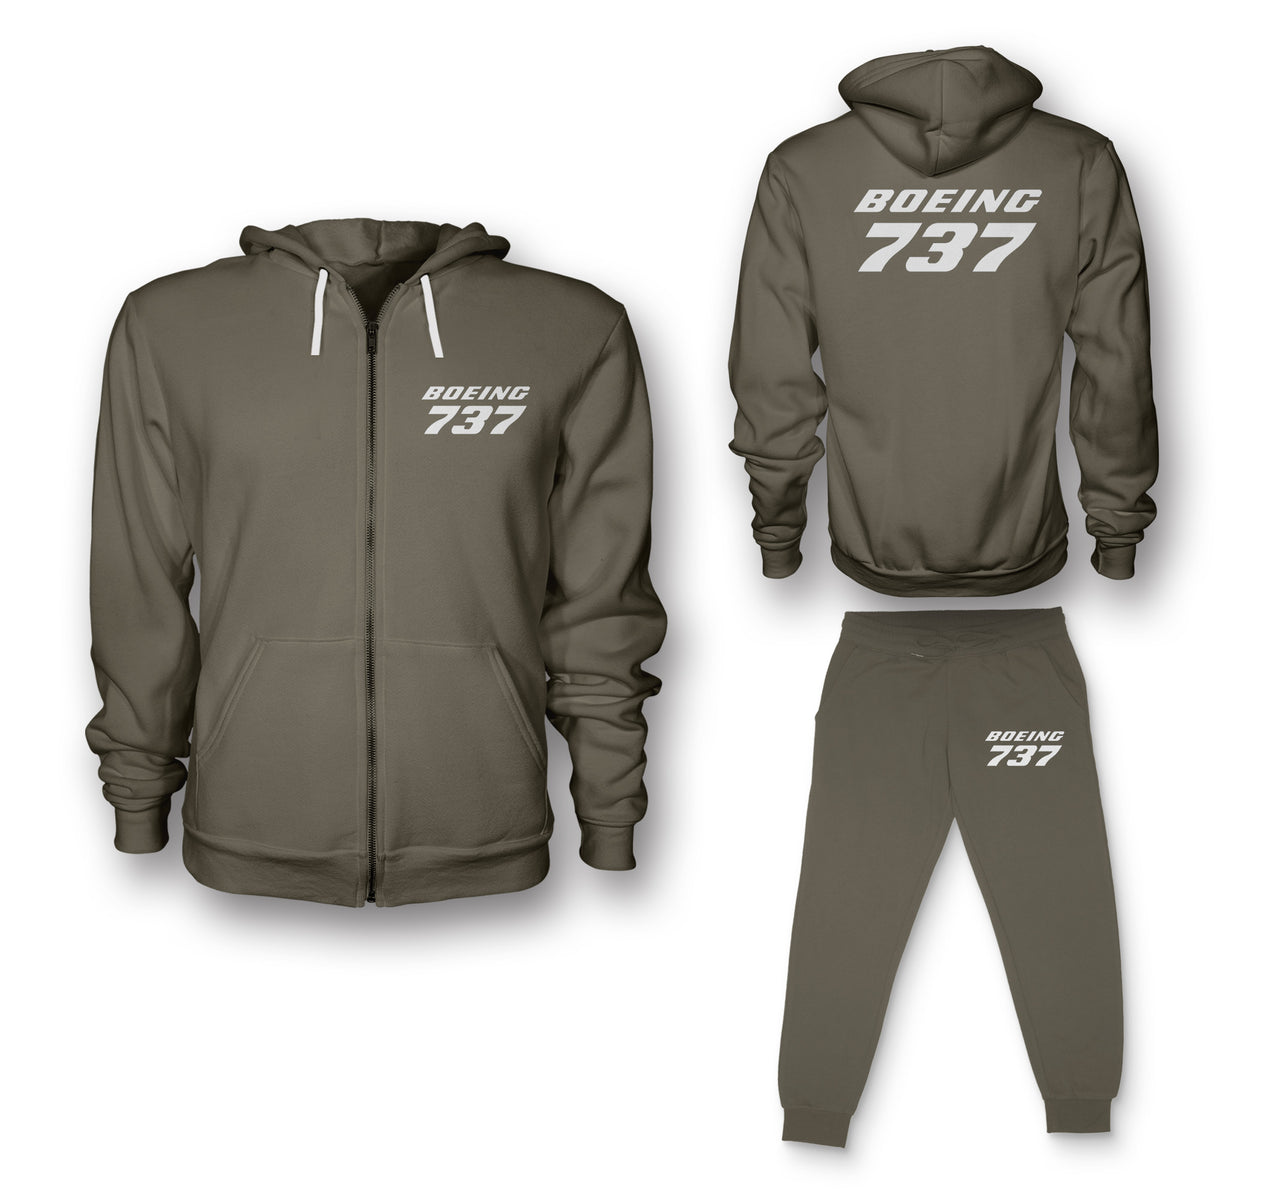 Boeing 737 & Text Designed Zipped Hoodies & Sweatpants Set